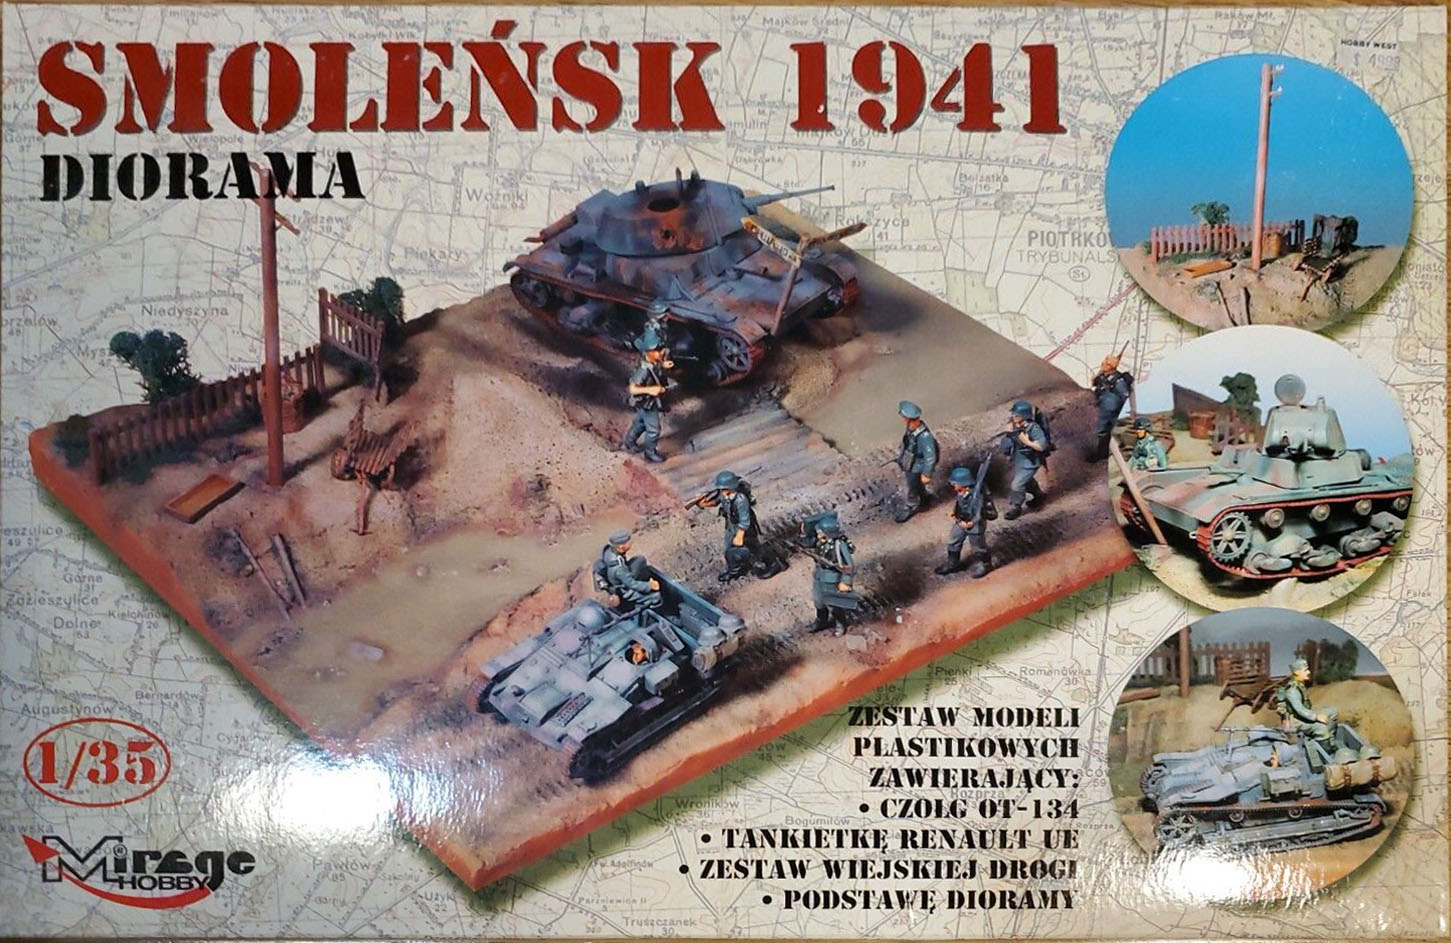 35102 Smolensk 1941 Diorama Image